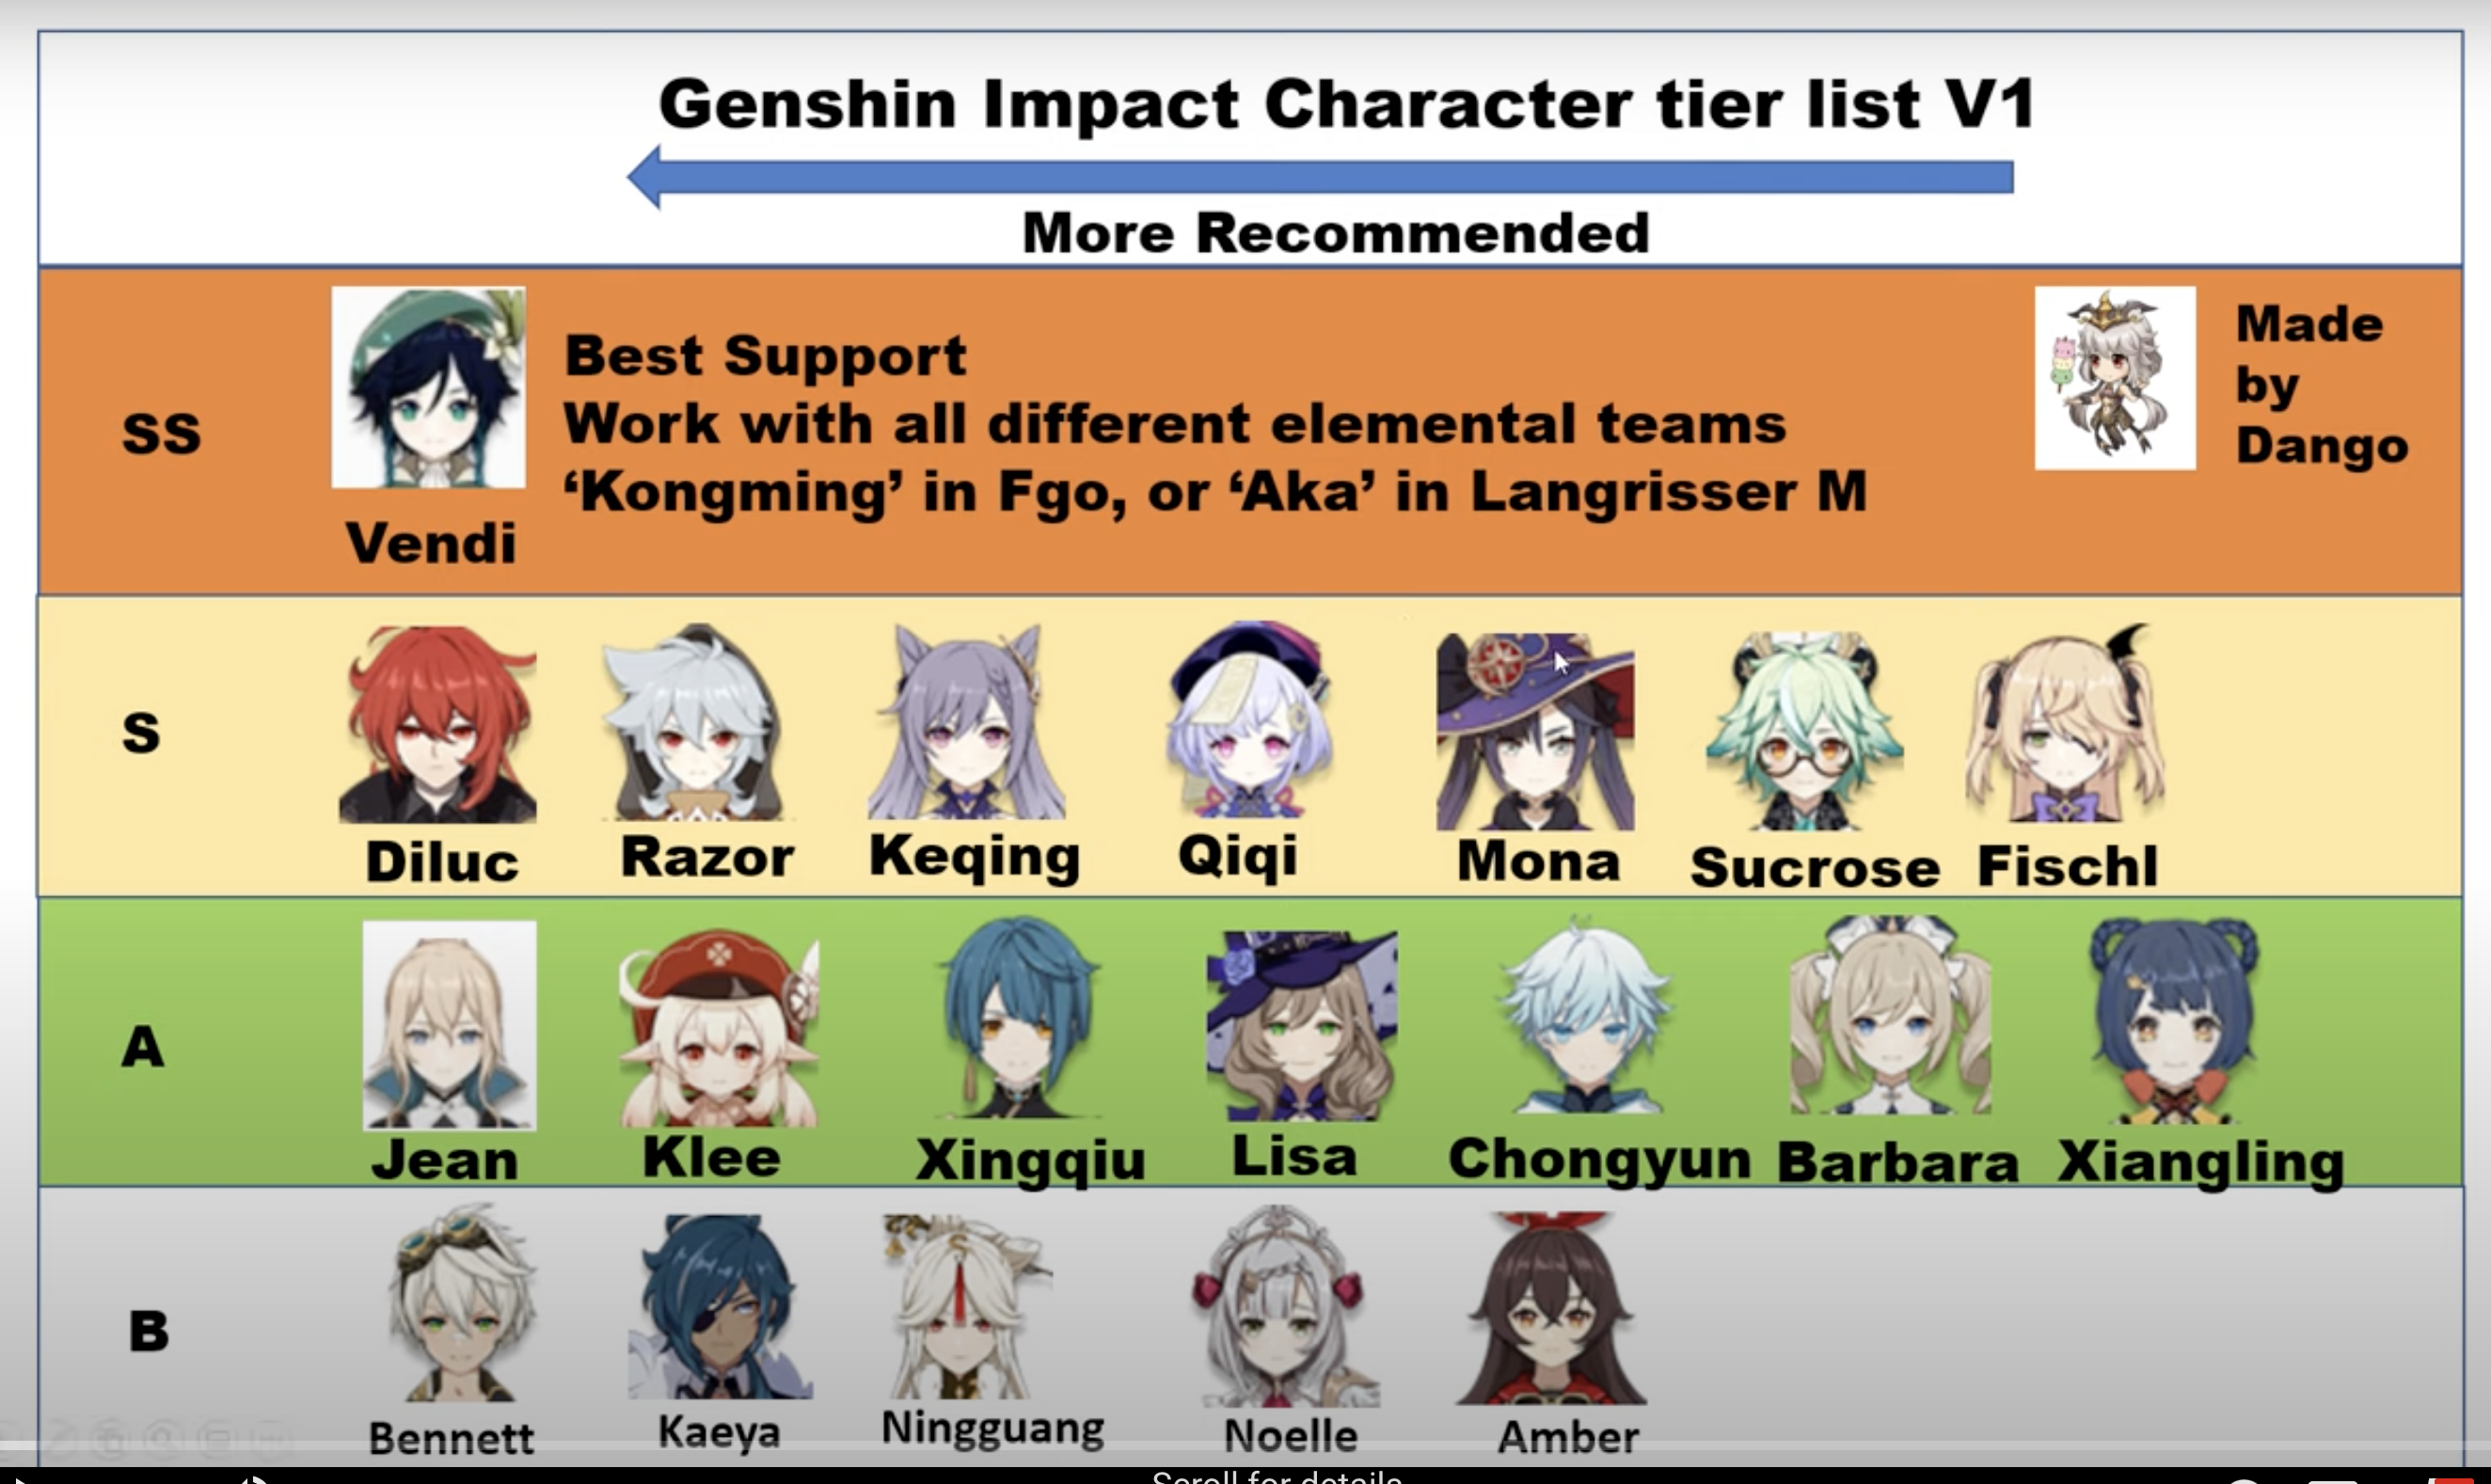 Genshin girls ranking calculator. Геншин персонажи имена. Персонажи Геншина Импакт имена. Genshin Impact персонажи Tier list. Список персов Геншин Импакт.